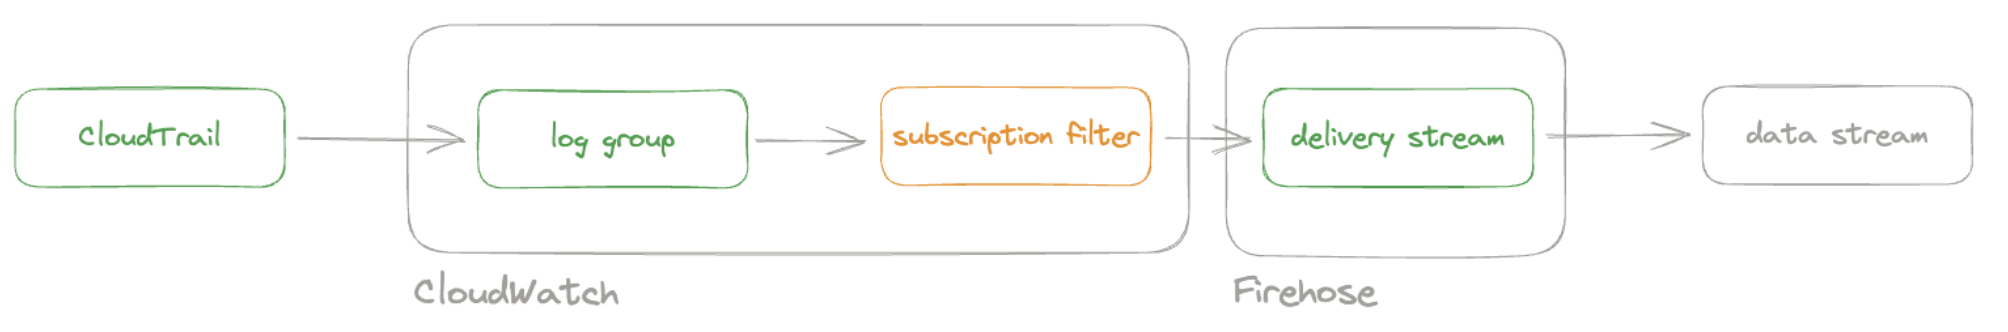 Firehose subscription filter